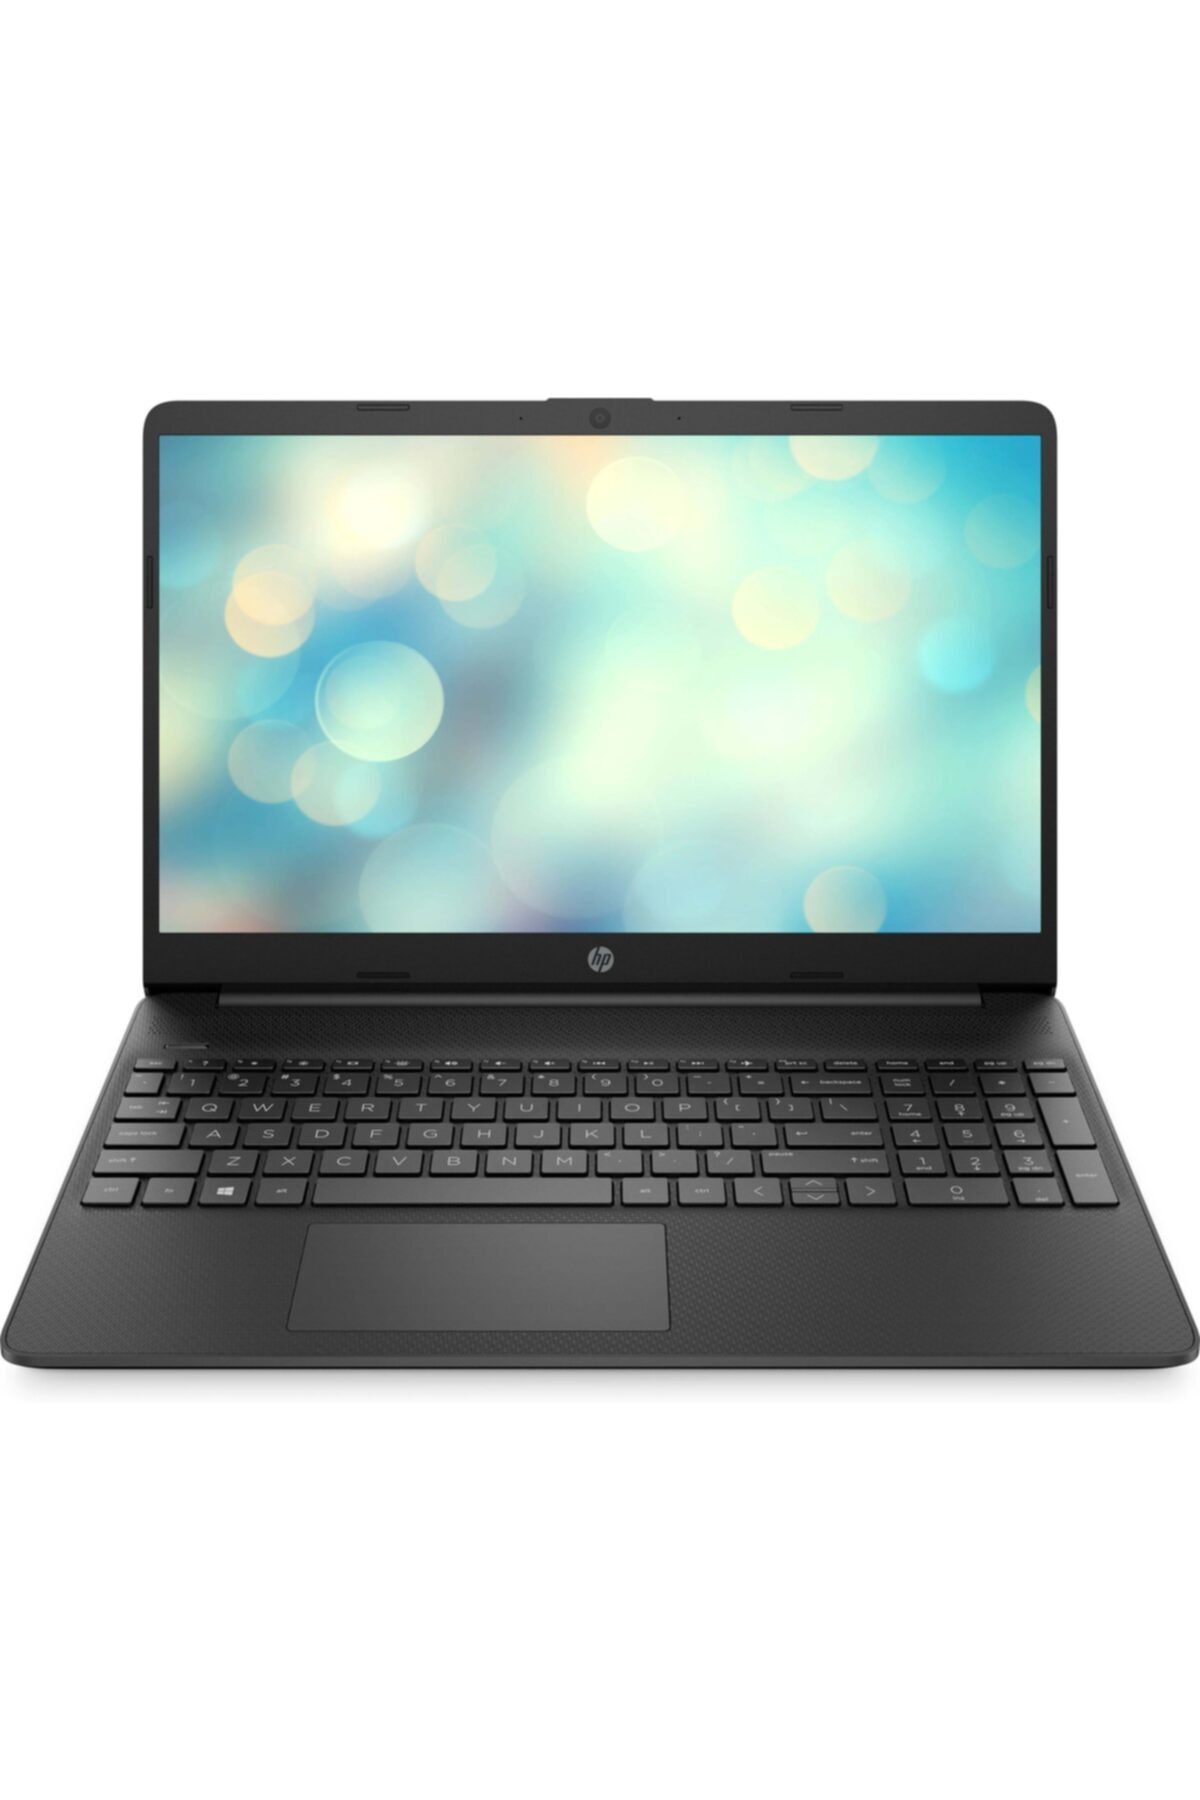 HP Laptop Amd Ryzen 3 5300u 8 Gb 256 Gb Ssd 15,6 Fhd Freedos Taşınabilir Bilgisayar 4h0k2ea